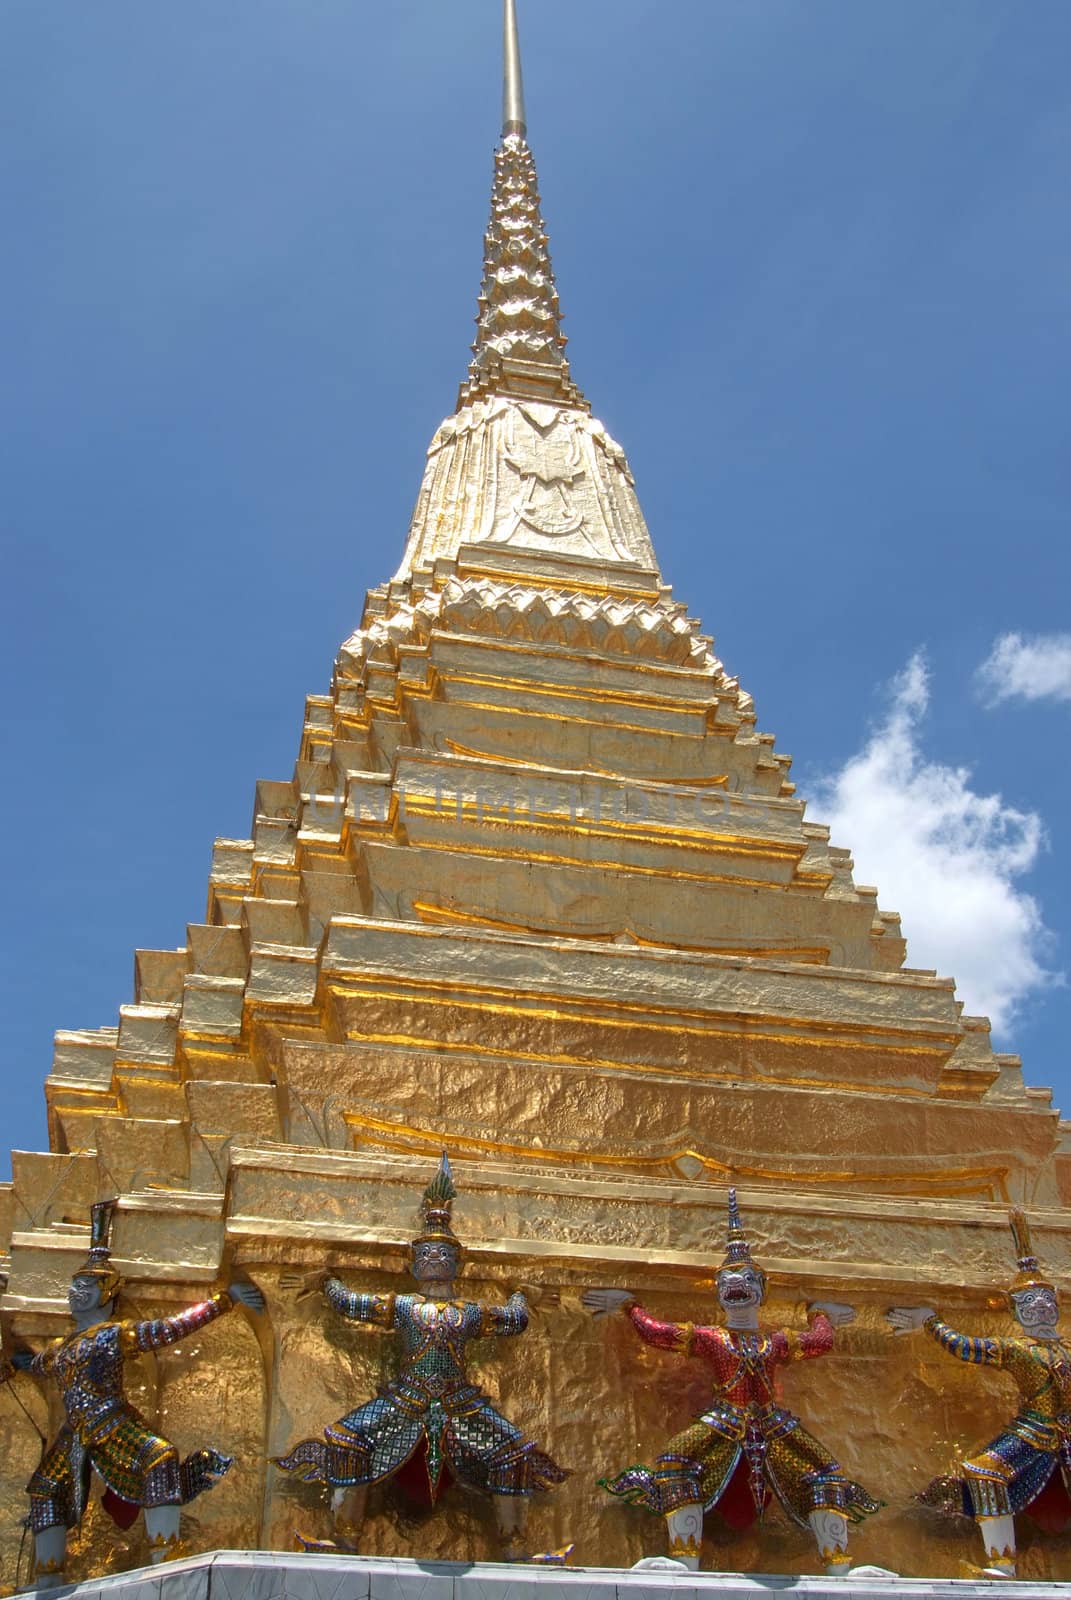 The Golden pagoda of Wat Phra Kaew temple, Bangkok, Thailand 